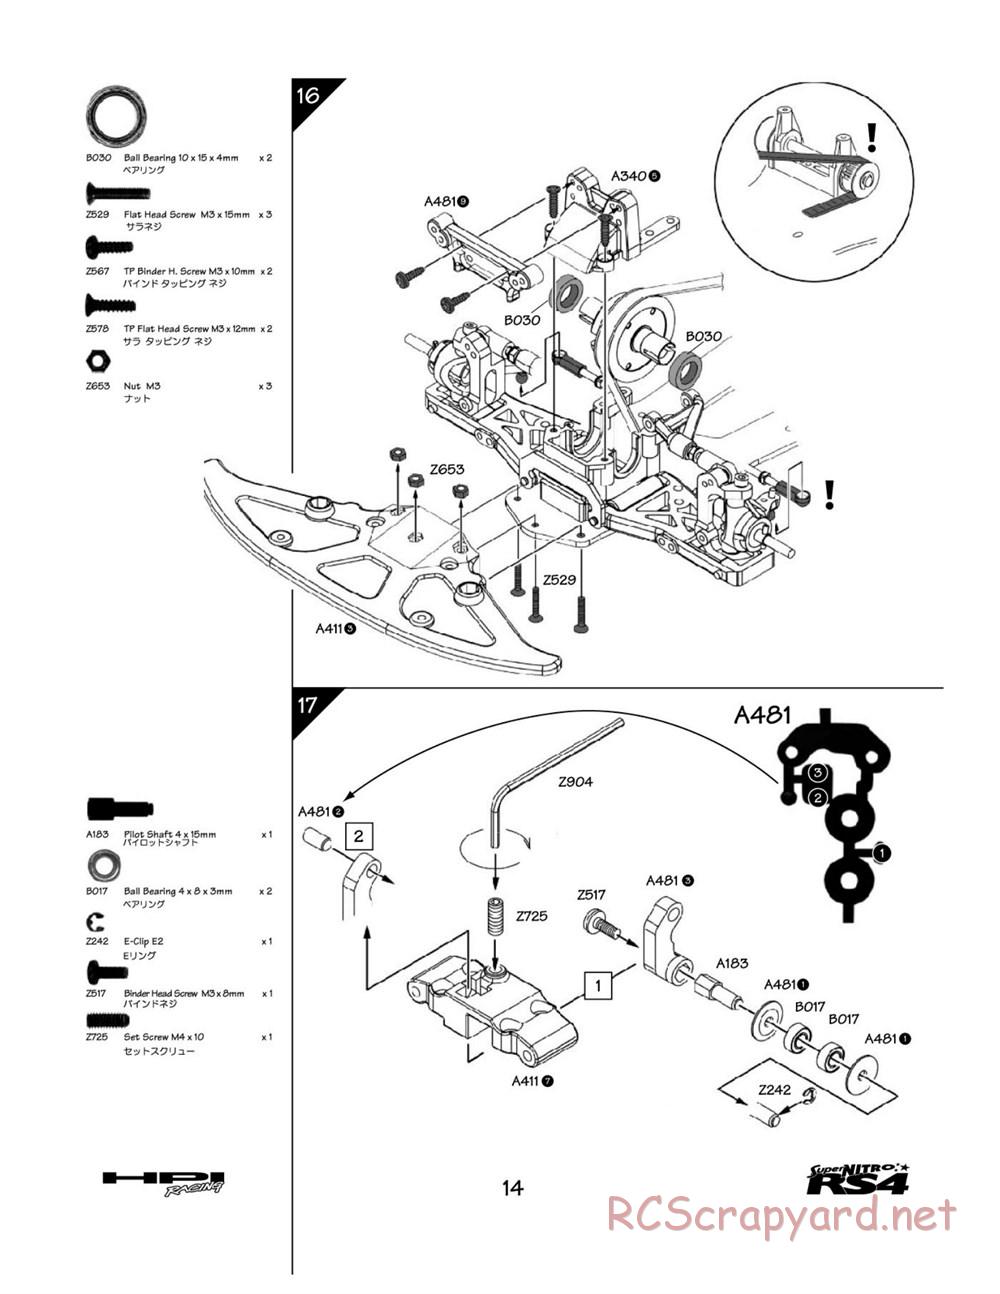 HPI - Super Nitro RS4 - Manual - Page 14